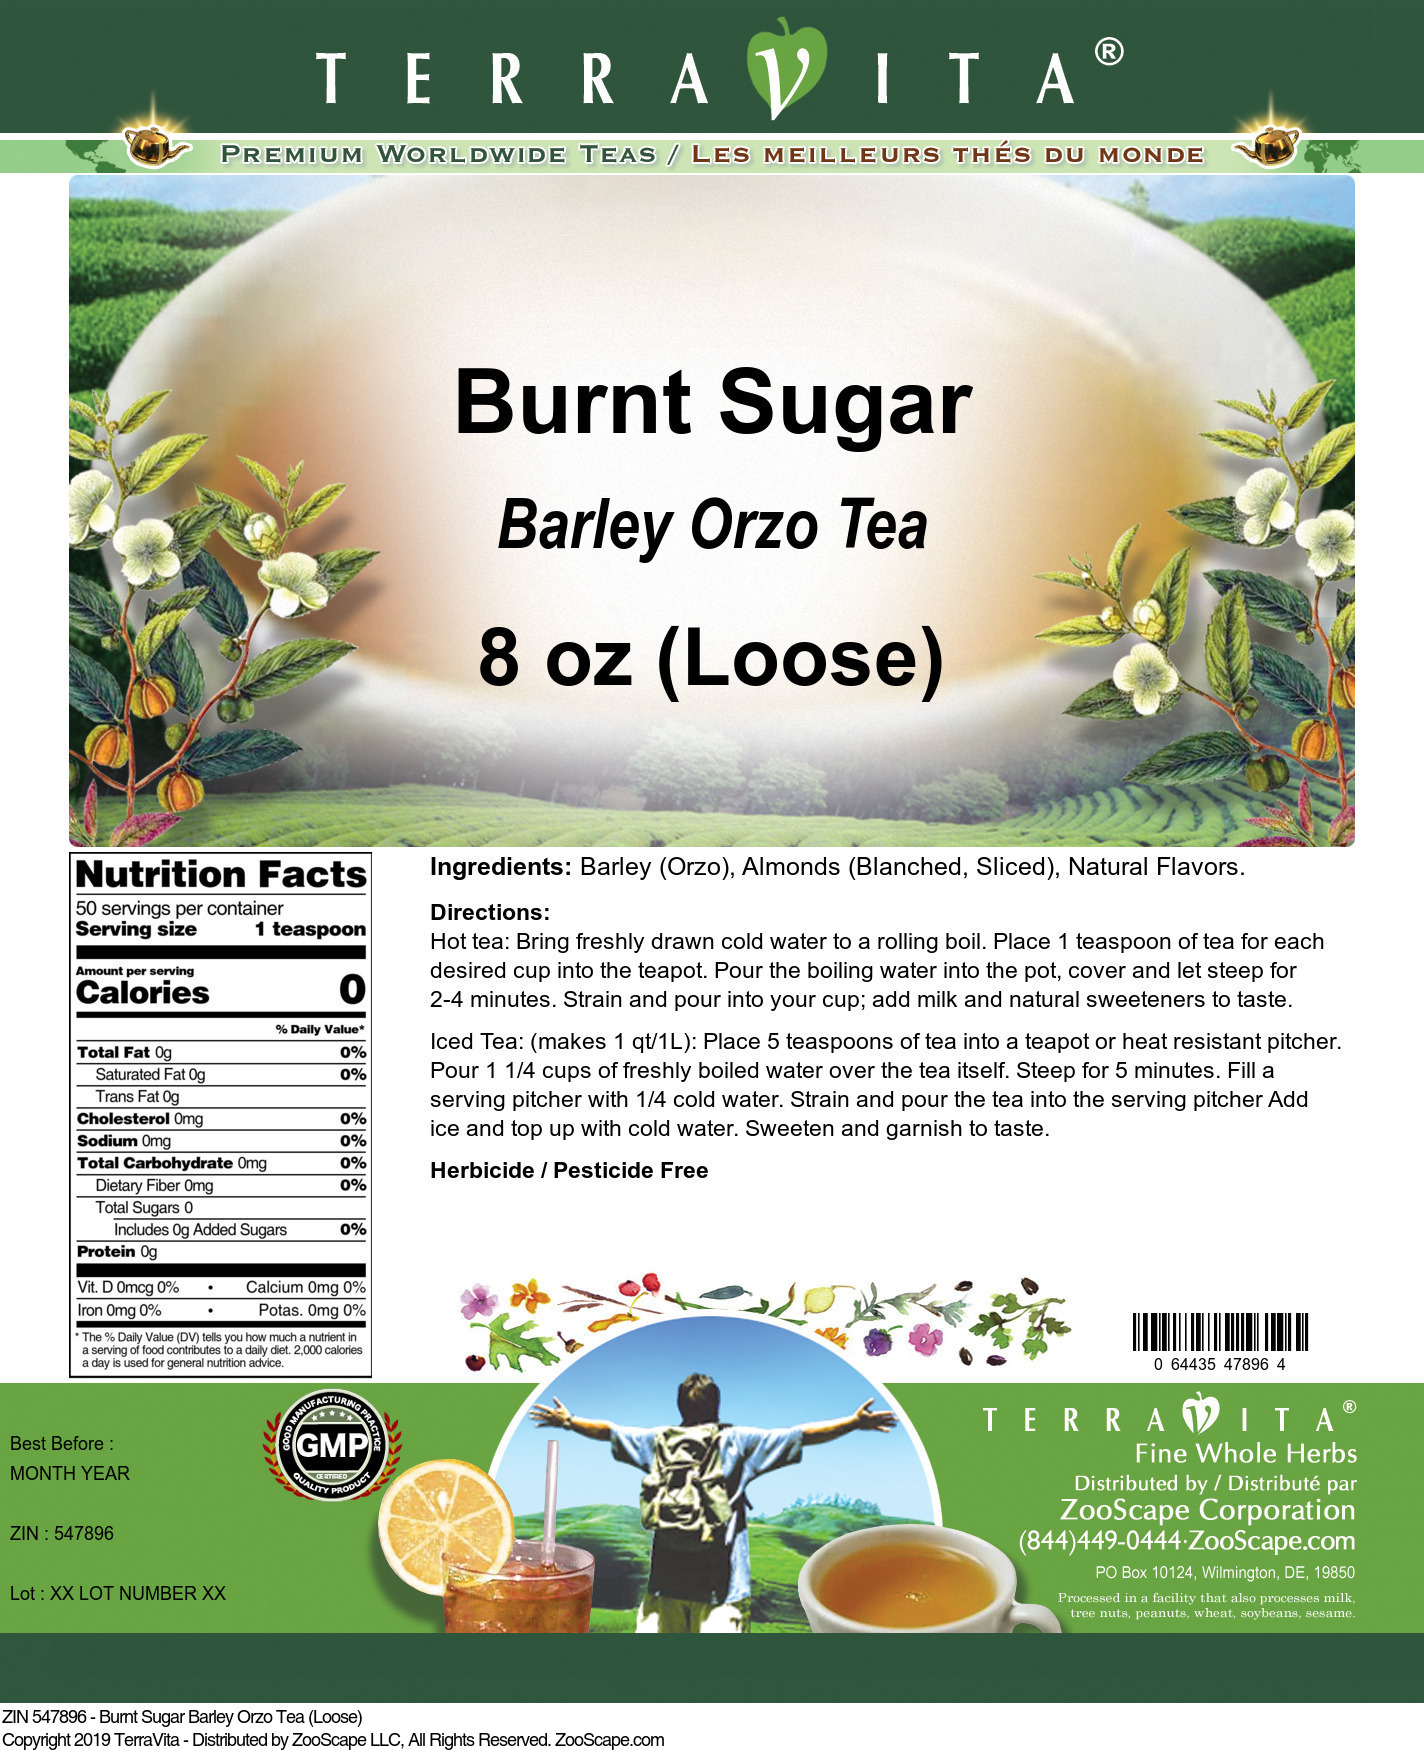 Burnt Sugar Barley Orzo Tea (Loose) - Label